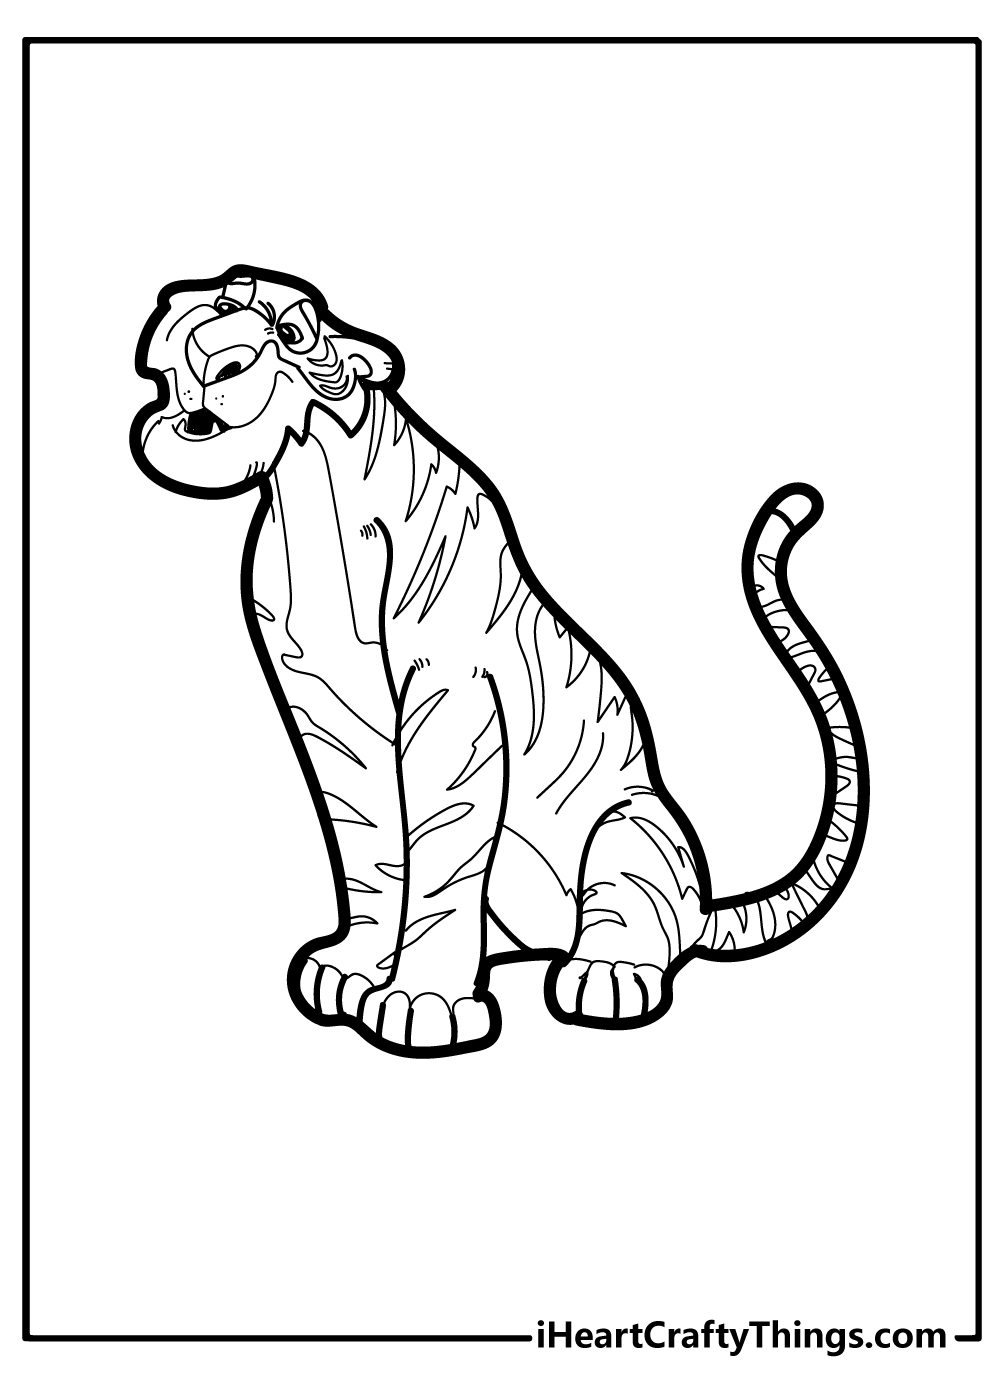 Tiger Coloring Original Sheet for children free download